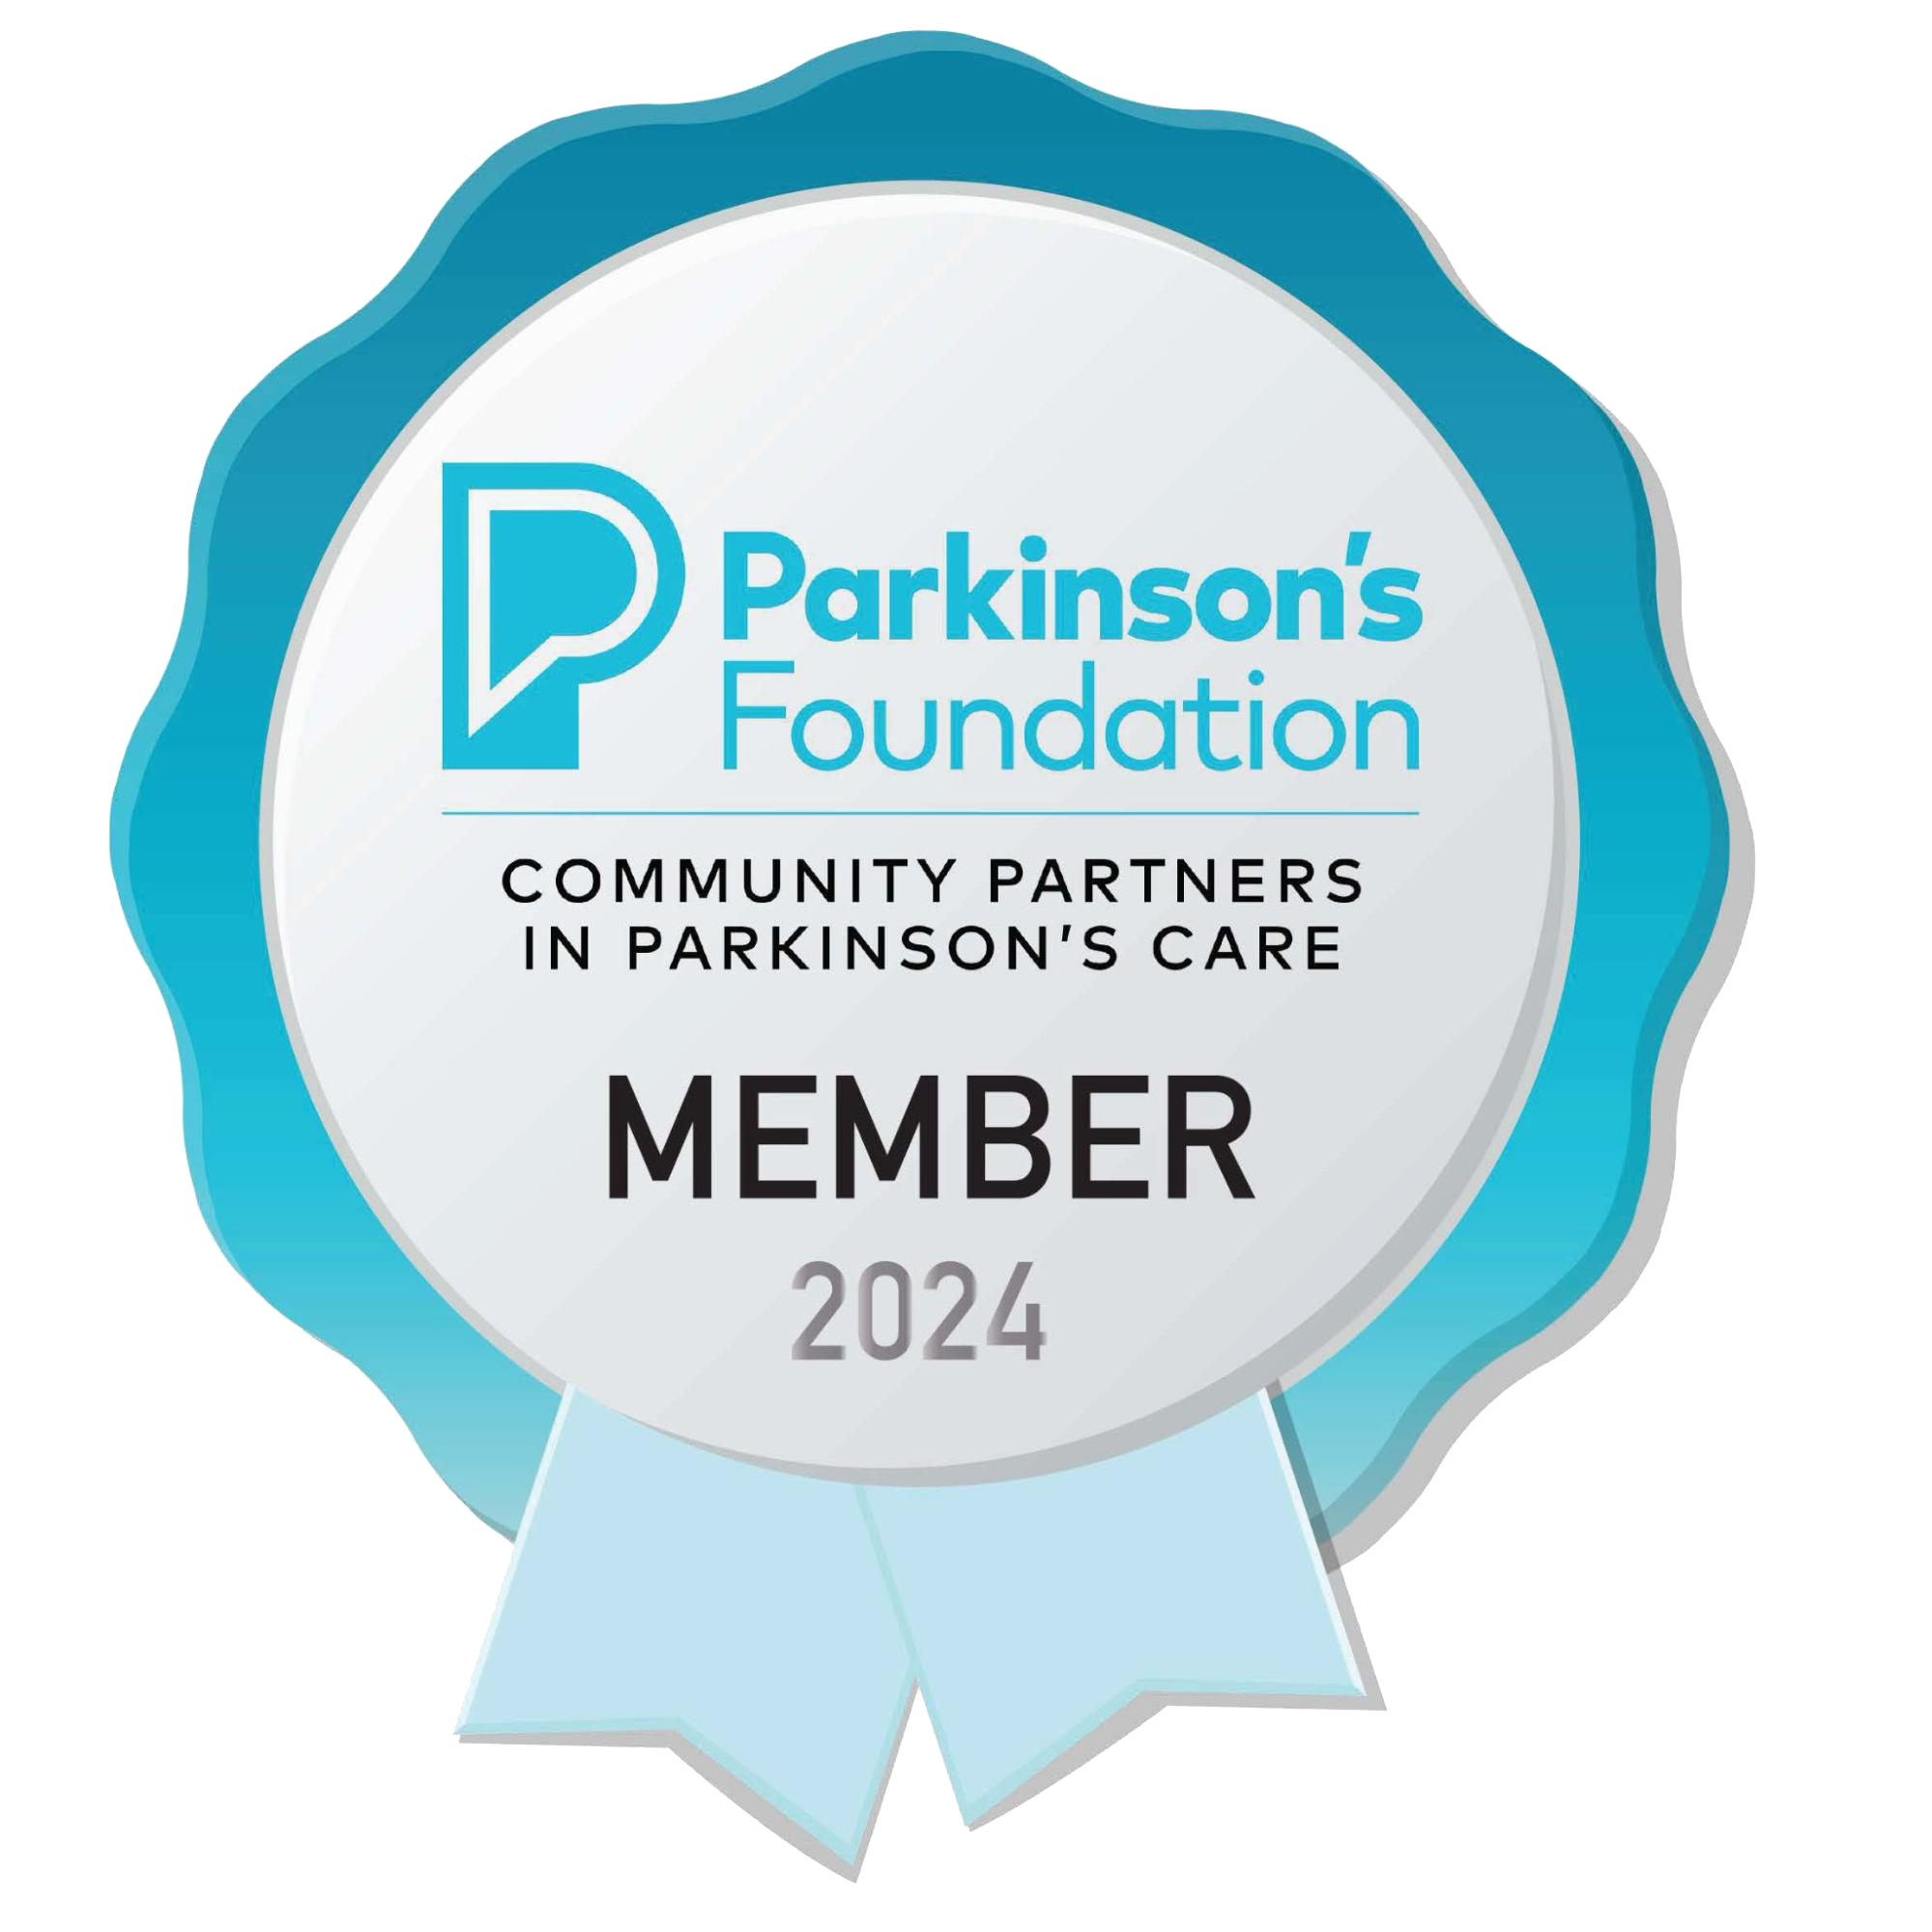 Parkinson's Foundation member 2024 badge